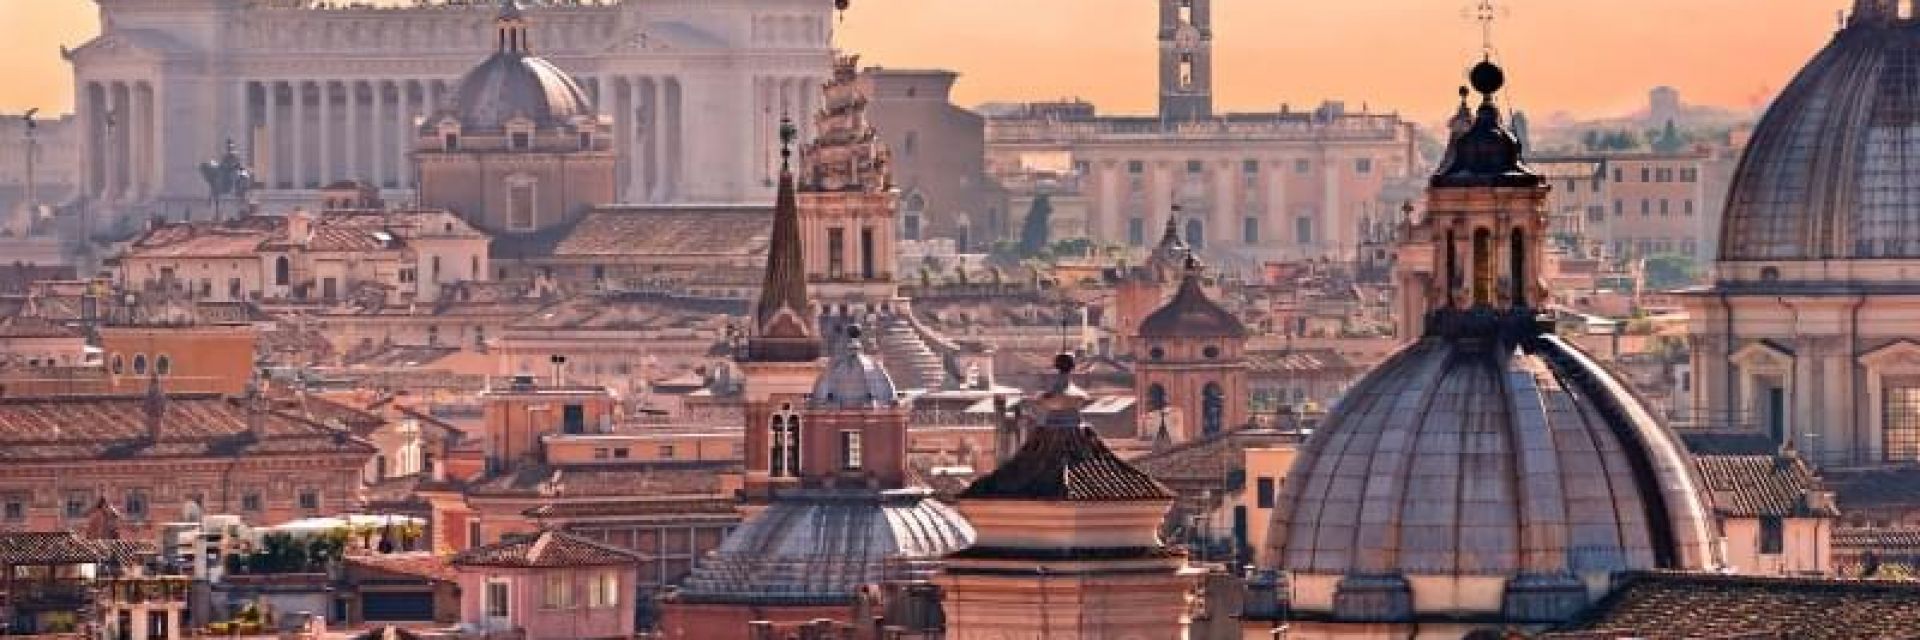 Roma - centro storico